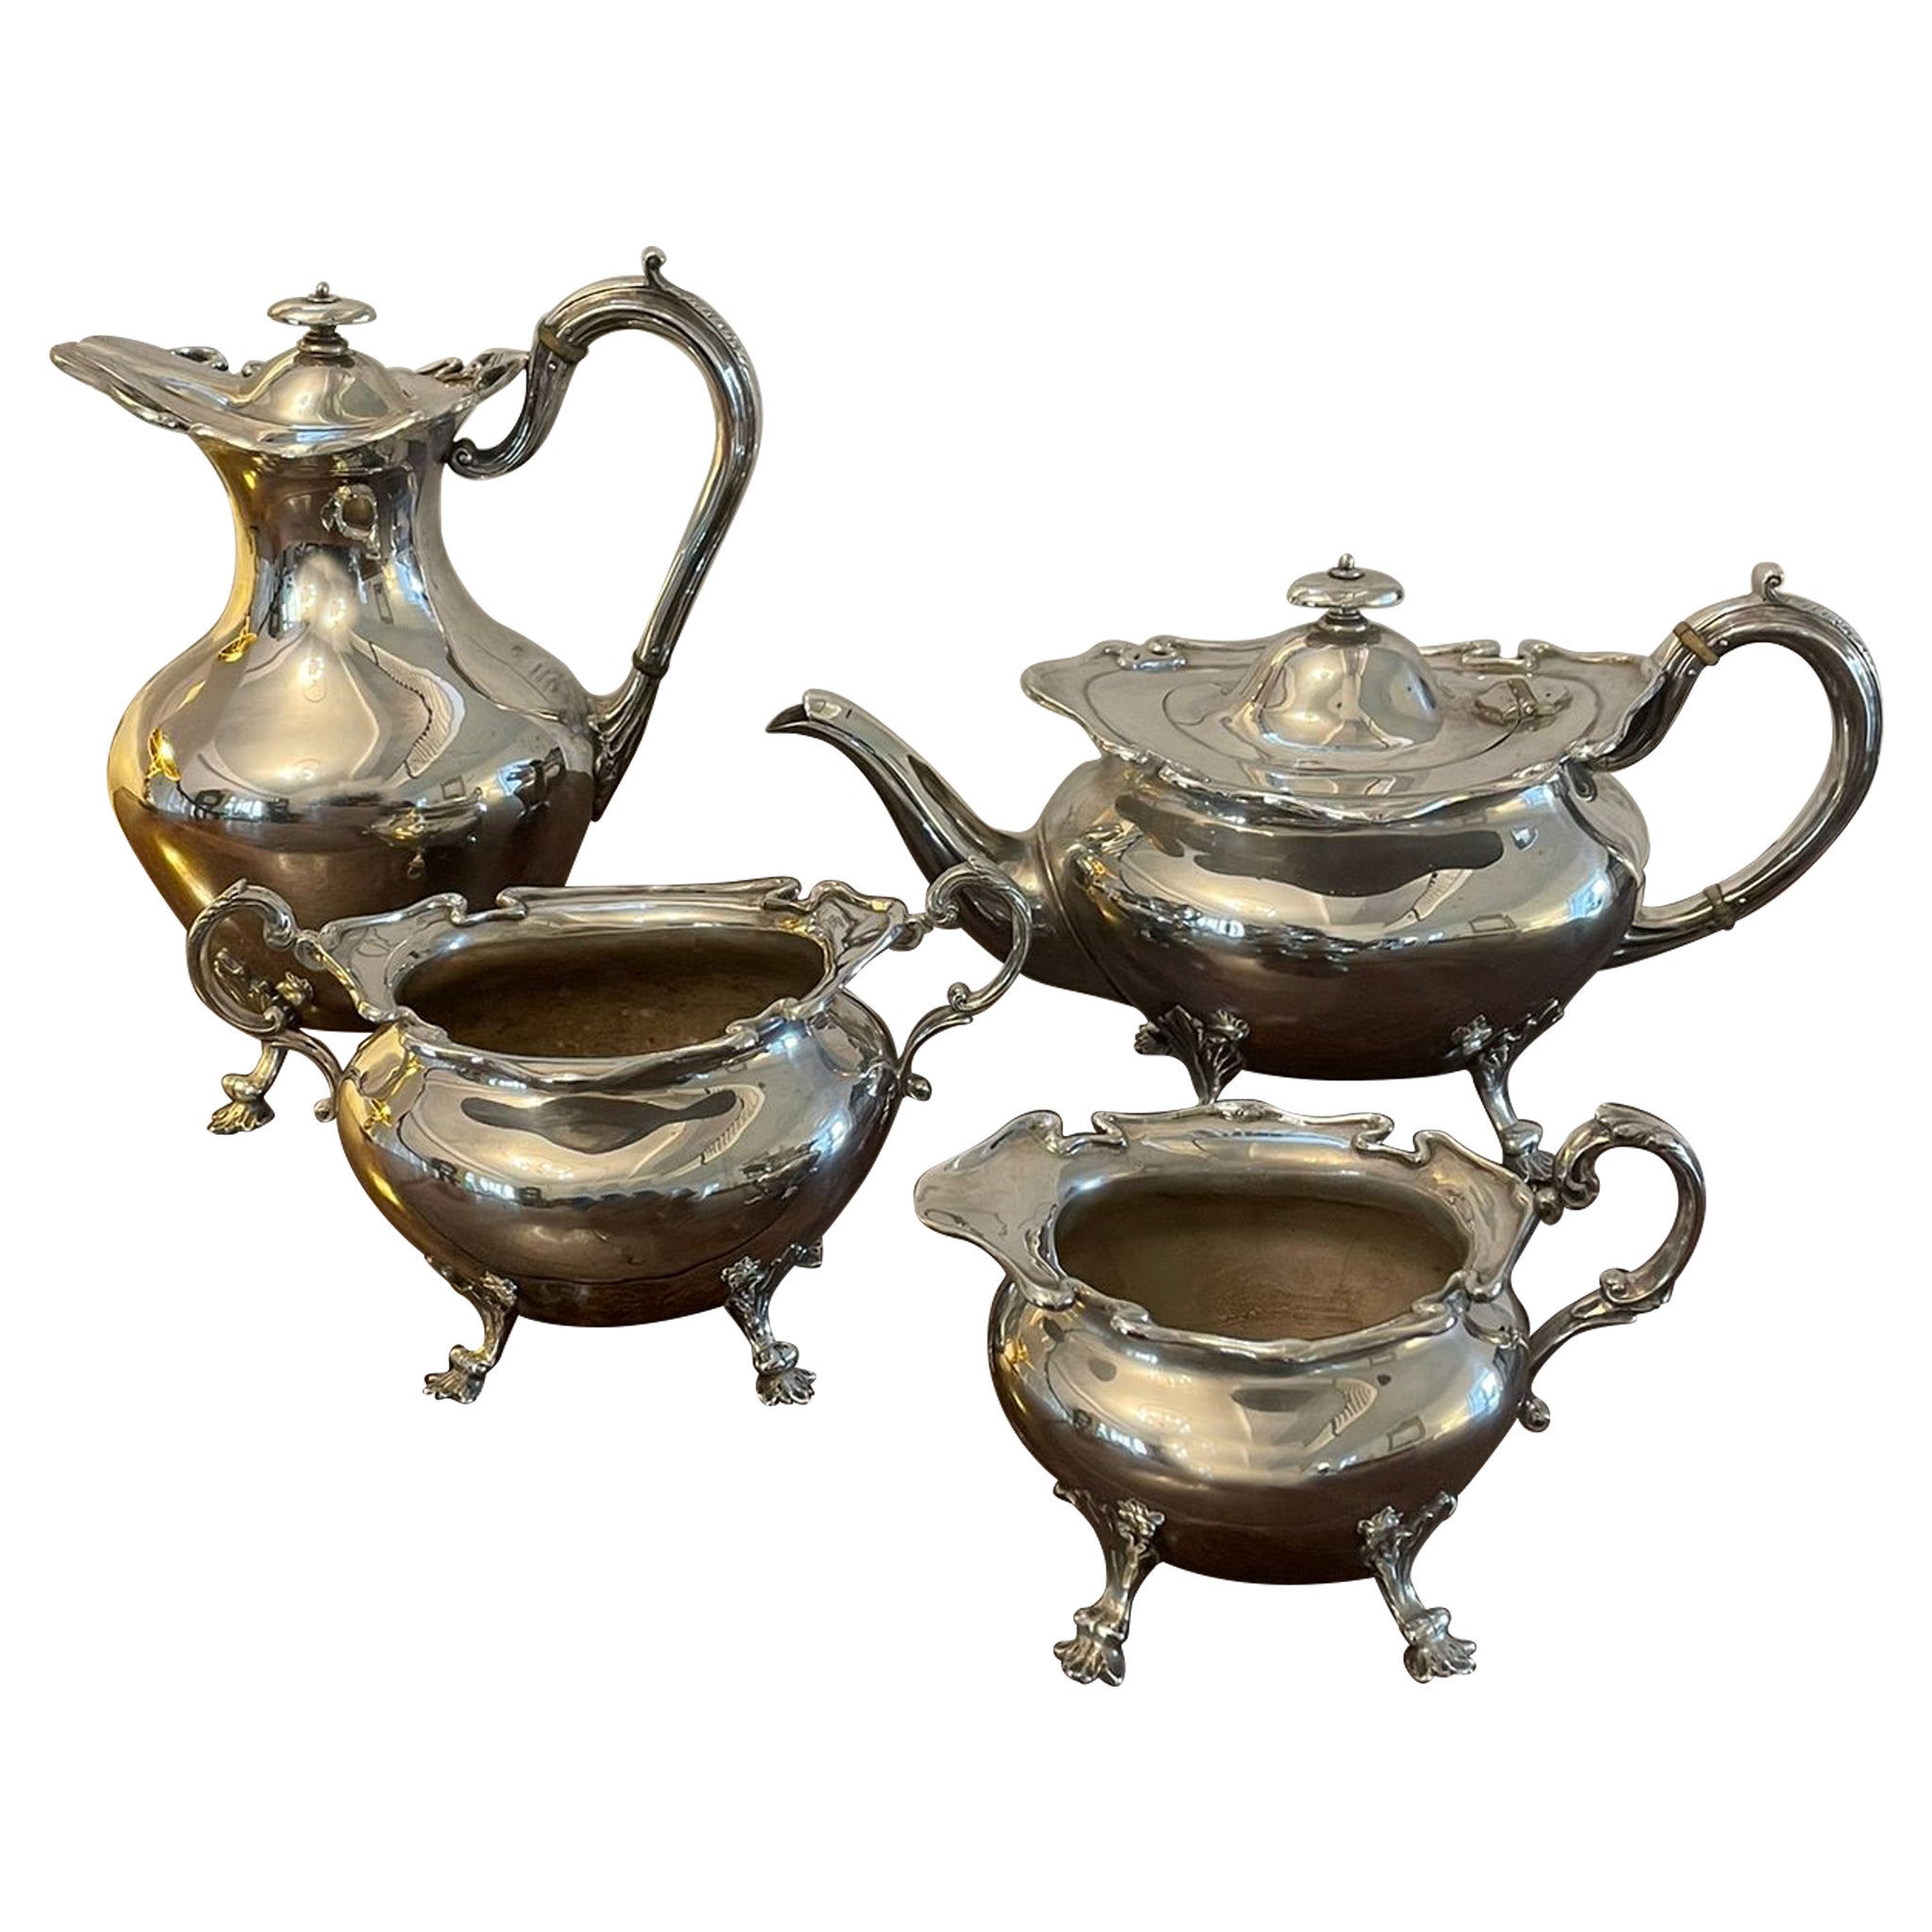 Antico set da tè da 4 pezzi placcato in argento di qualità edoardiana